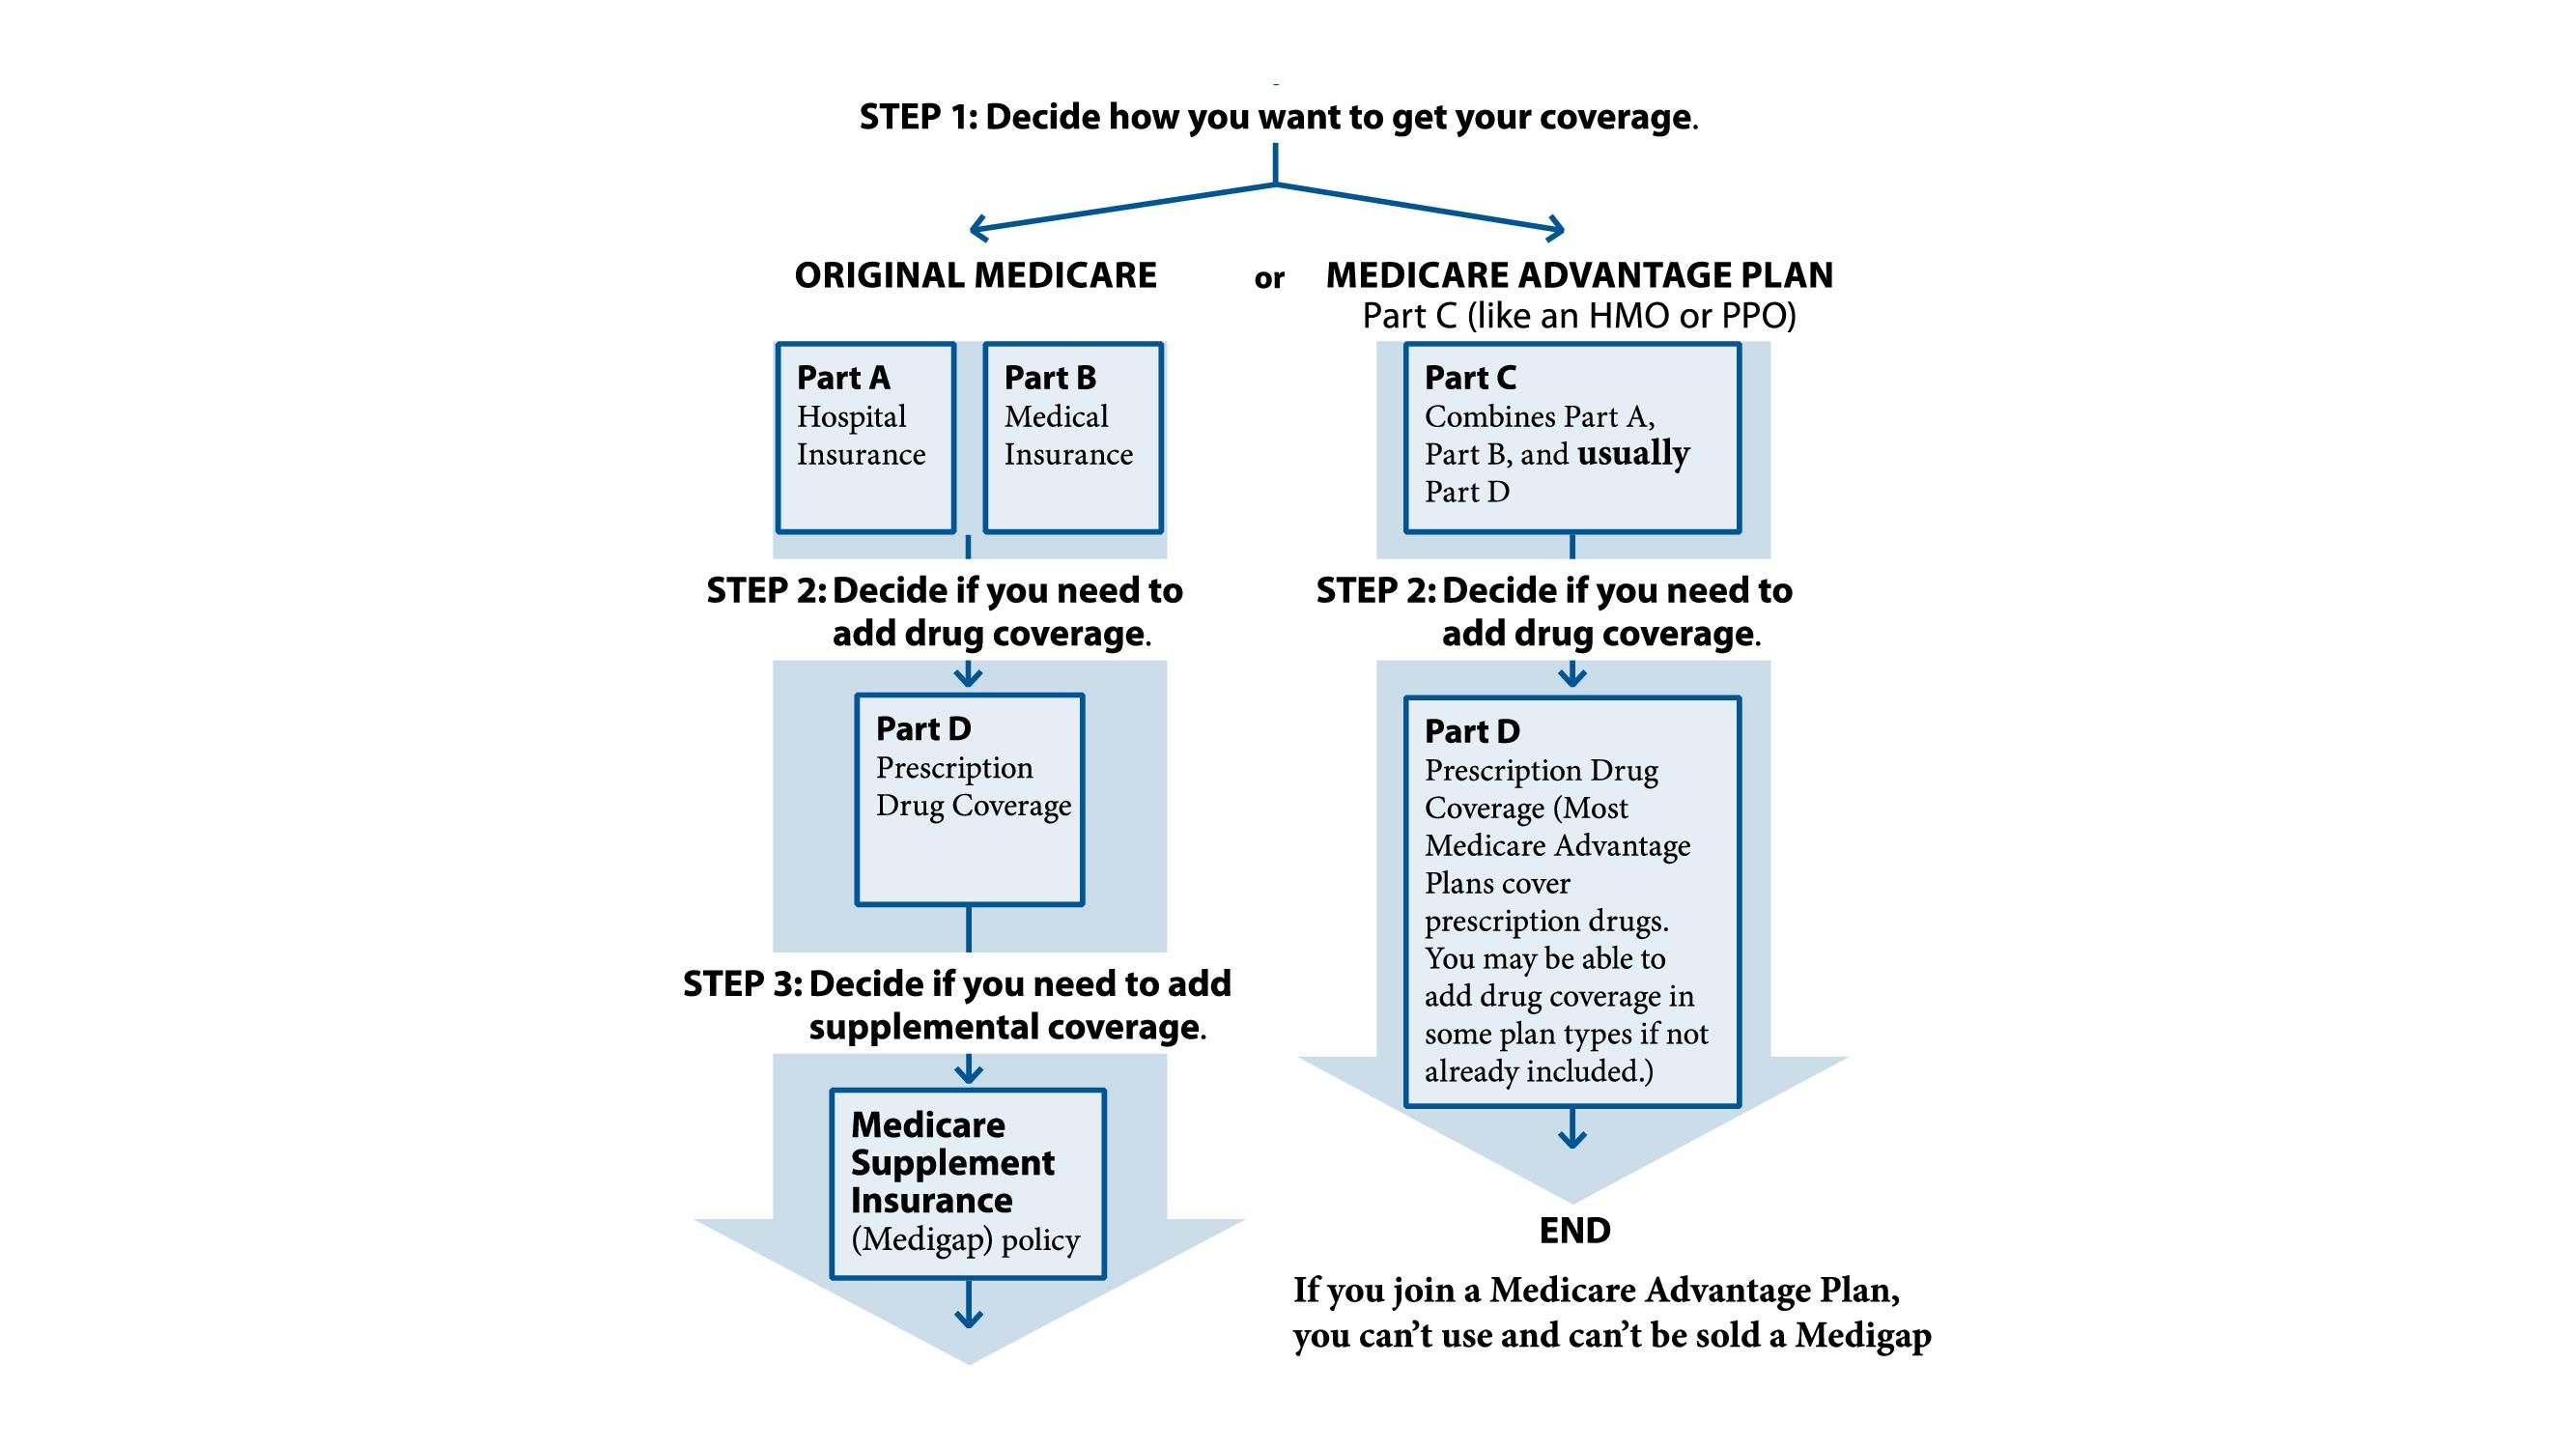 Medicare Advantage Vs Medigap Comparison Chart